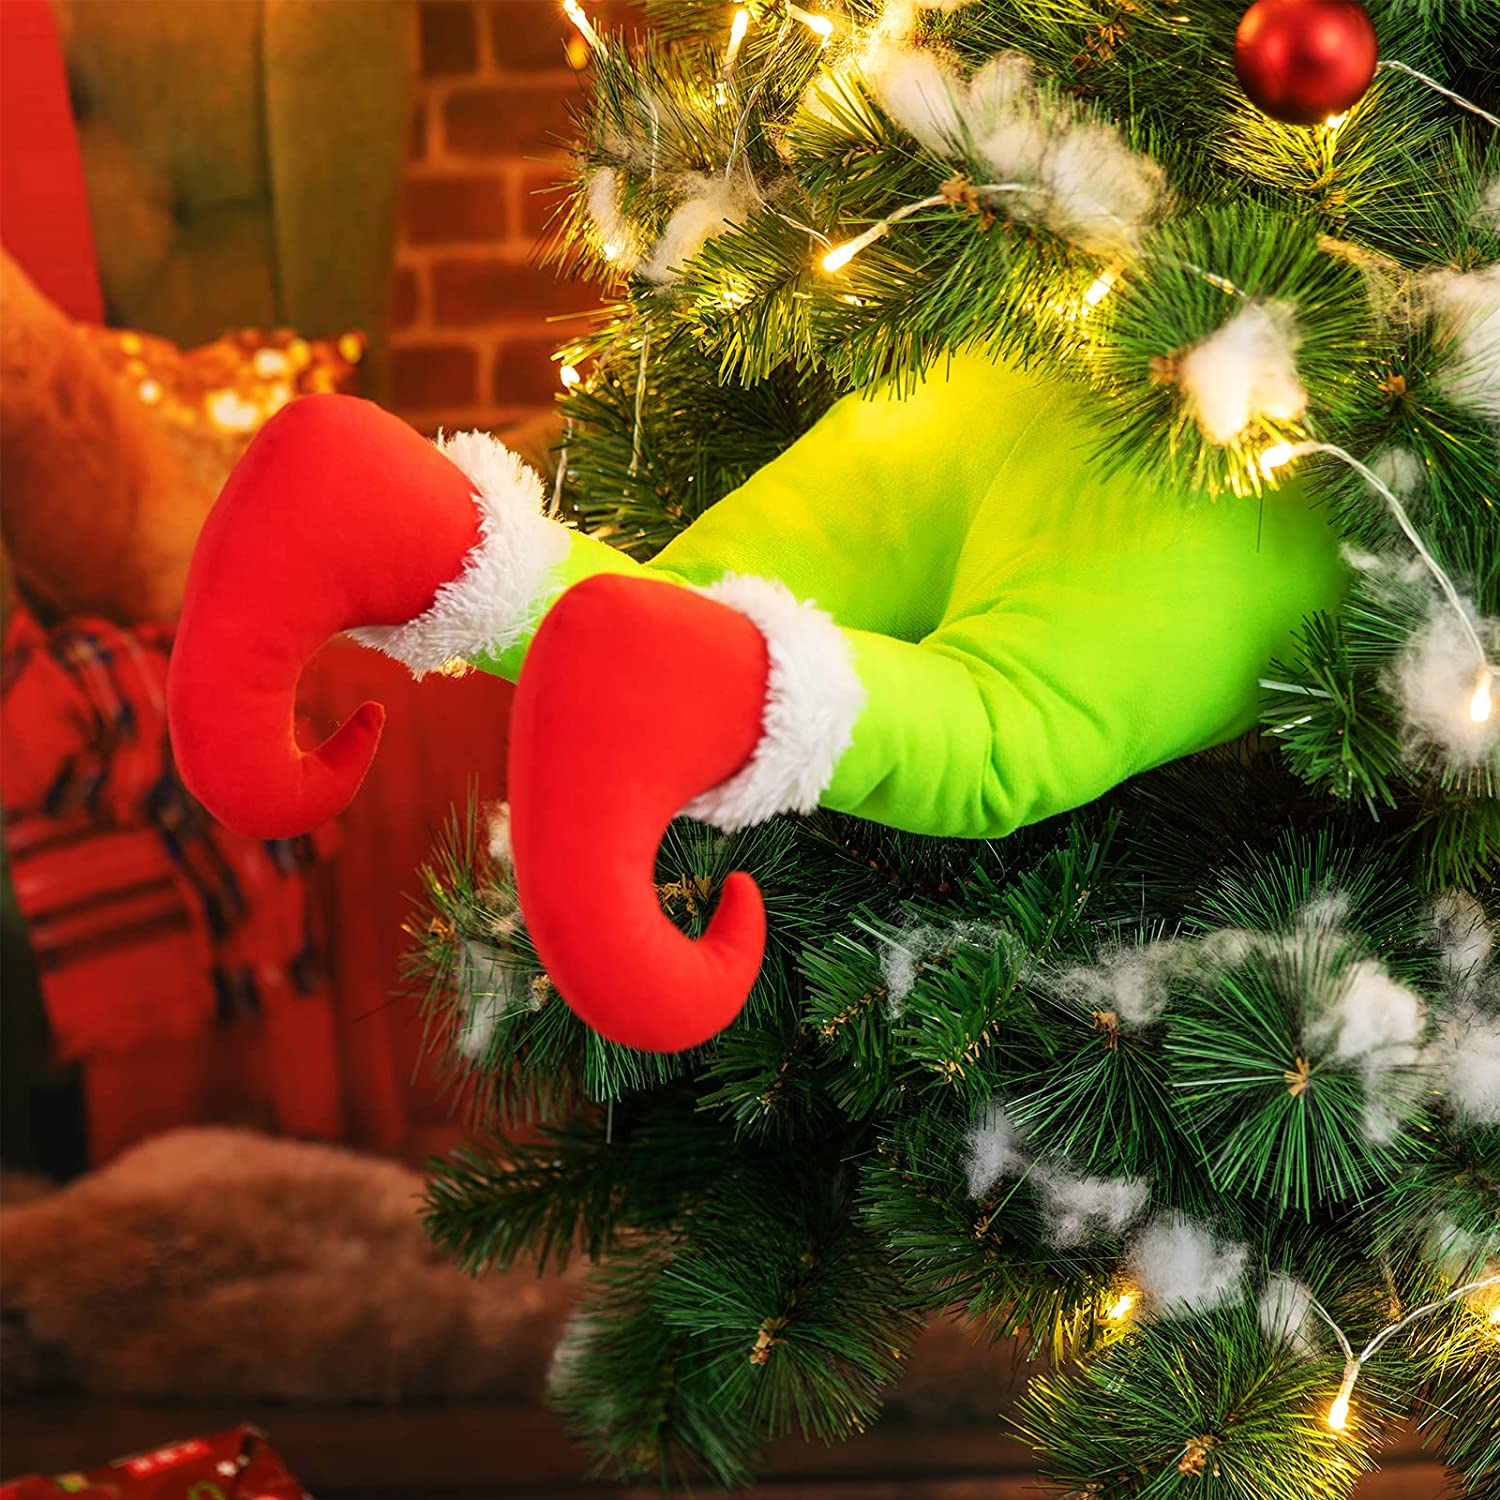 Grinch Christmas Ornaments Bells Balls Whimsical Tree Decor Polka Dot 6 Set  New